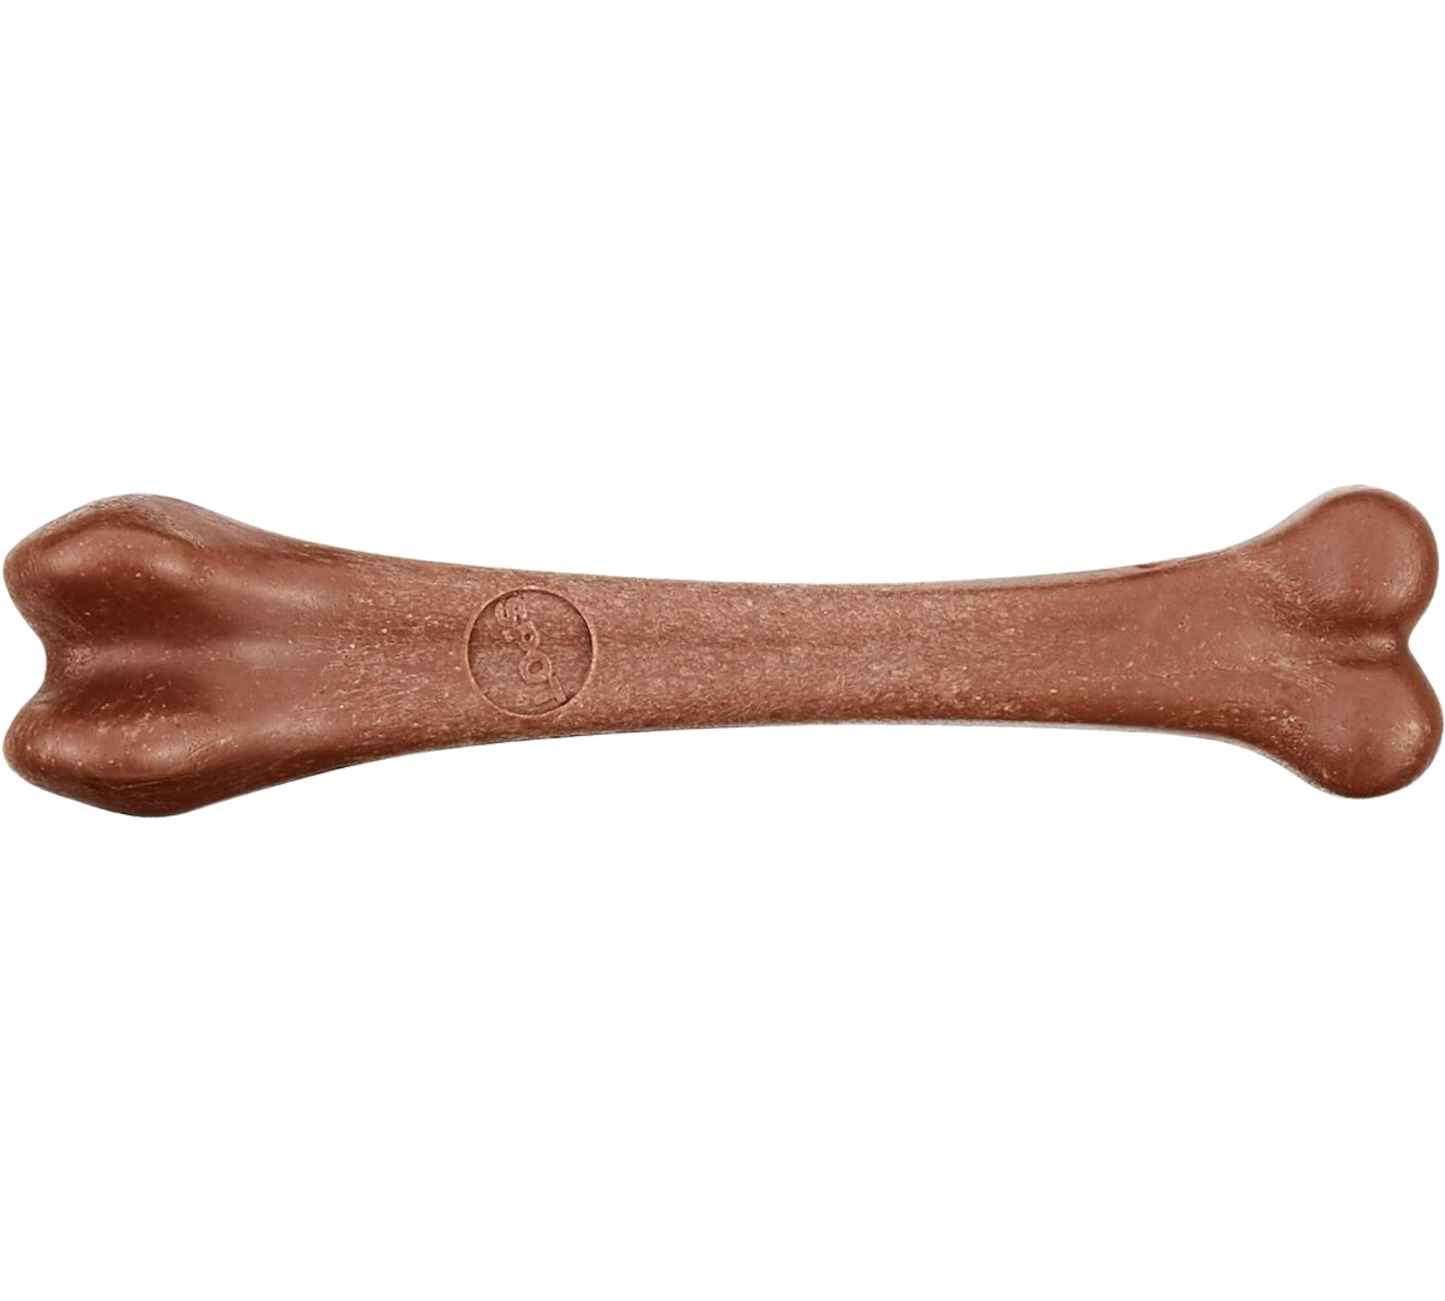 Ethical Pet Bam-bones Bone Bacon Tough Dog Chew Toy